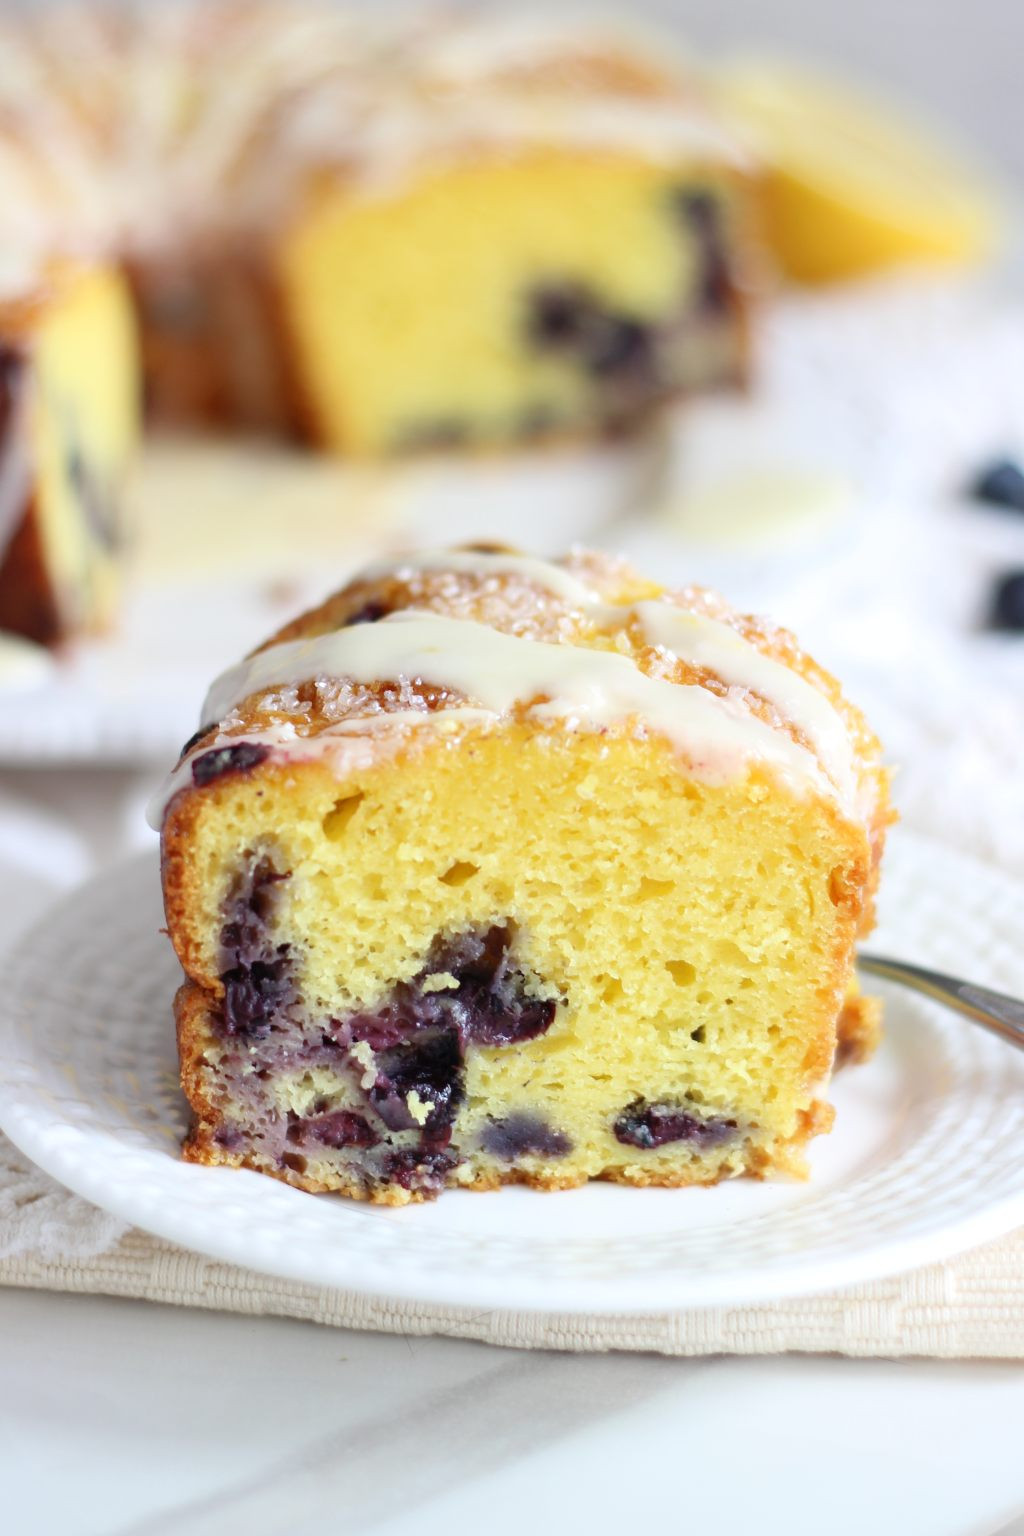 Lemon Bundt Cake From Cake Mix
 Lemon Blueberry Bundt Cake with Lemon Glaze